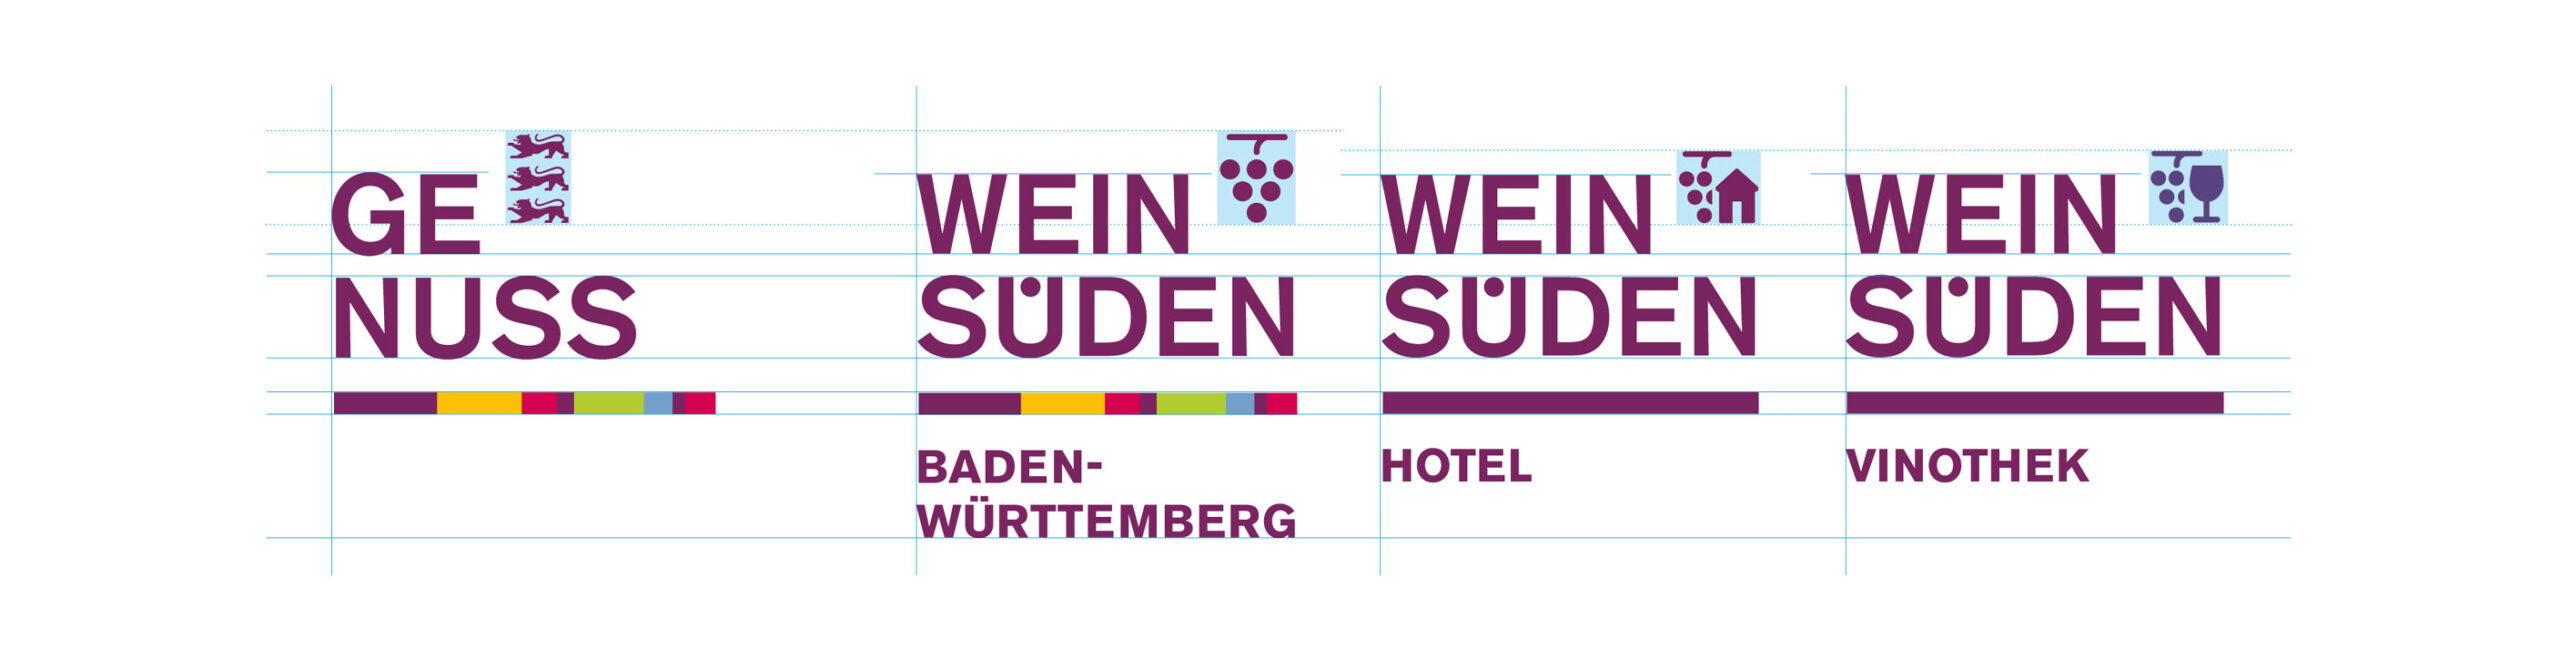 jungkommunikation_projekte_tmbw_tourismusmarketing-baden-wuerttemberg_kampagne_weinsueden_logo-systematik_1350x900-03